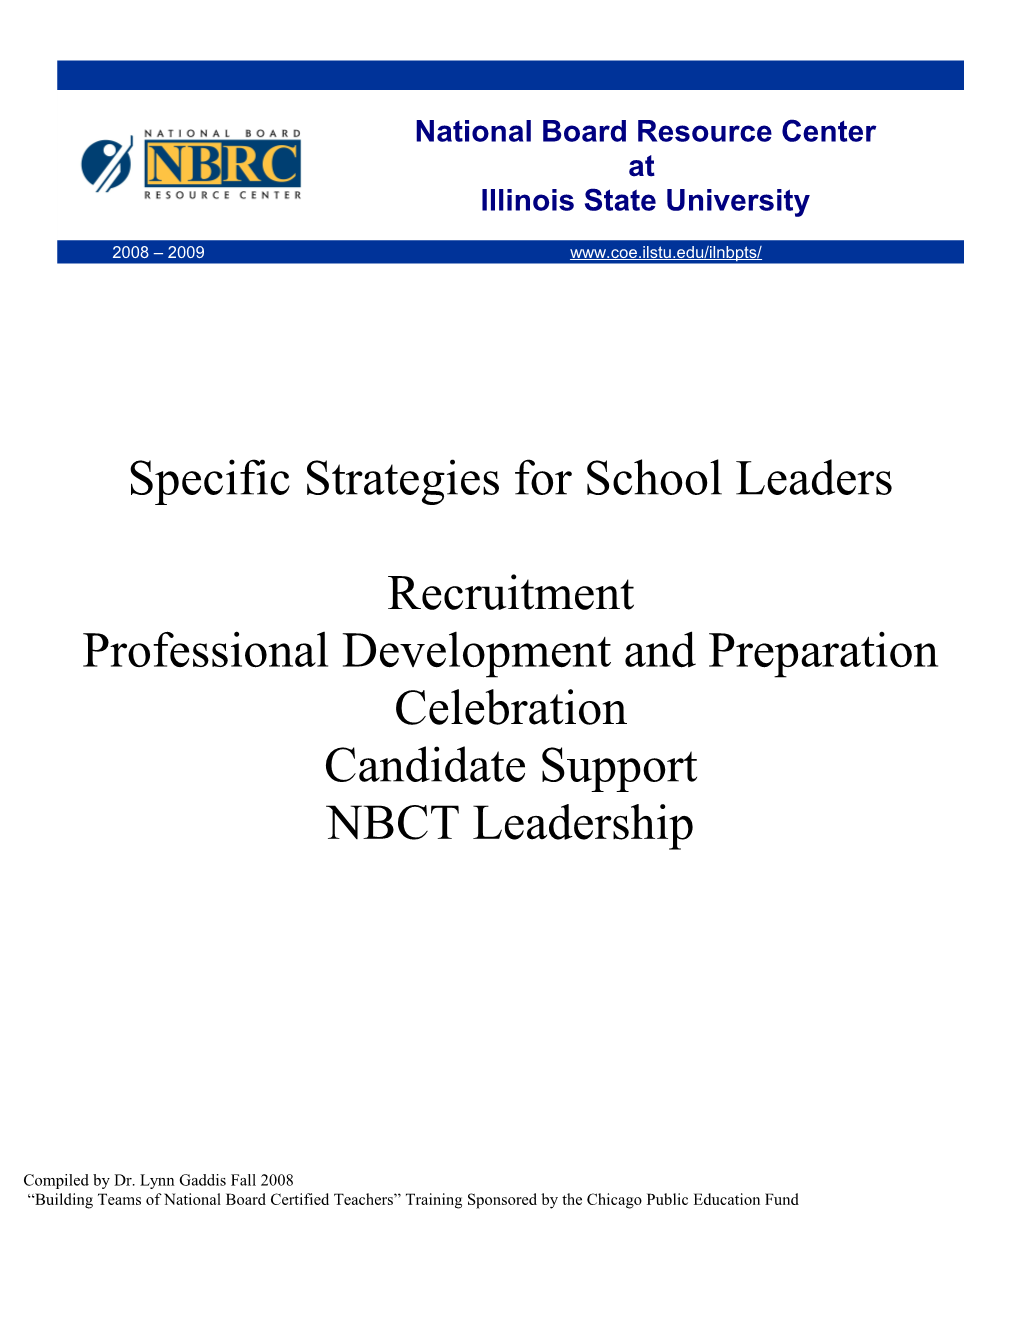 Specific Strategies for School Leaders